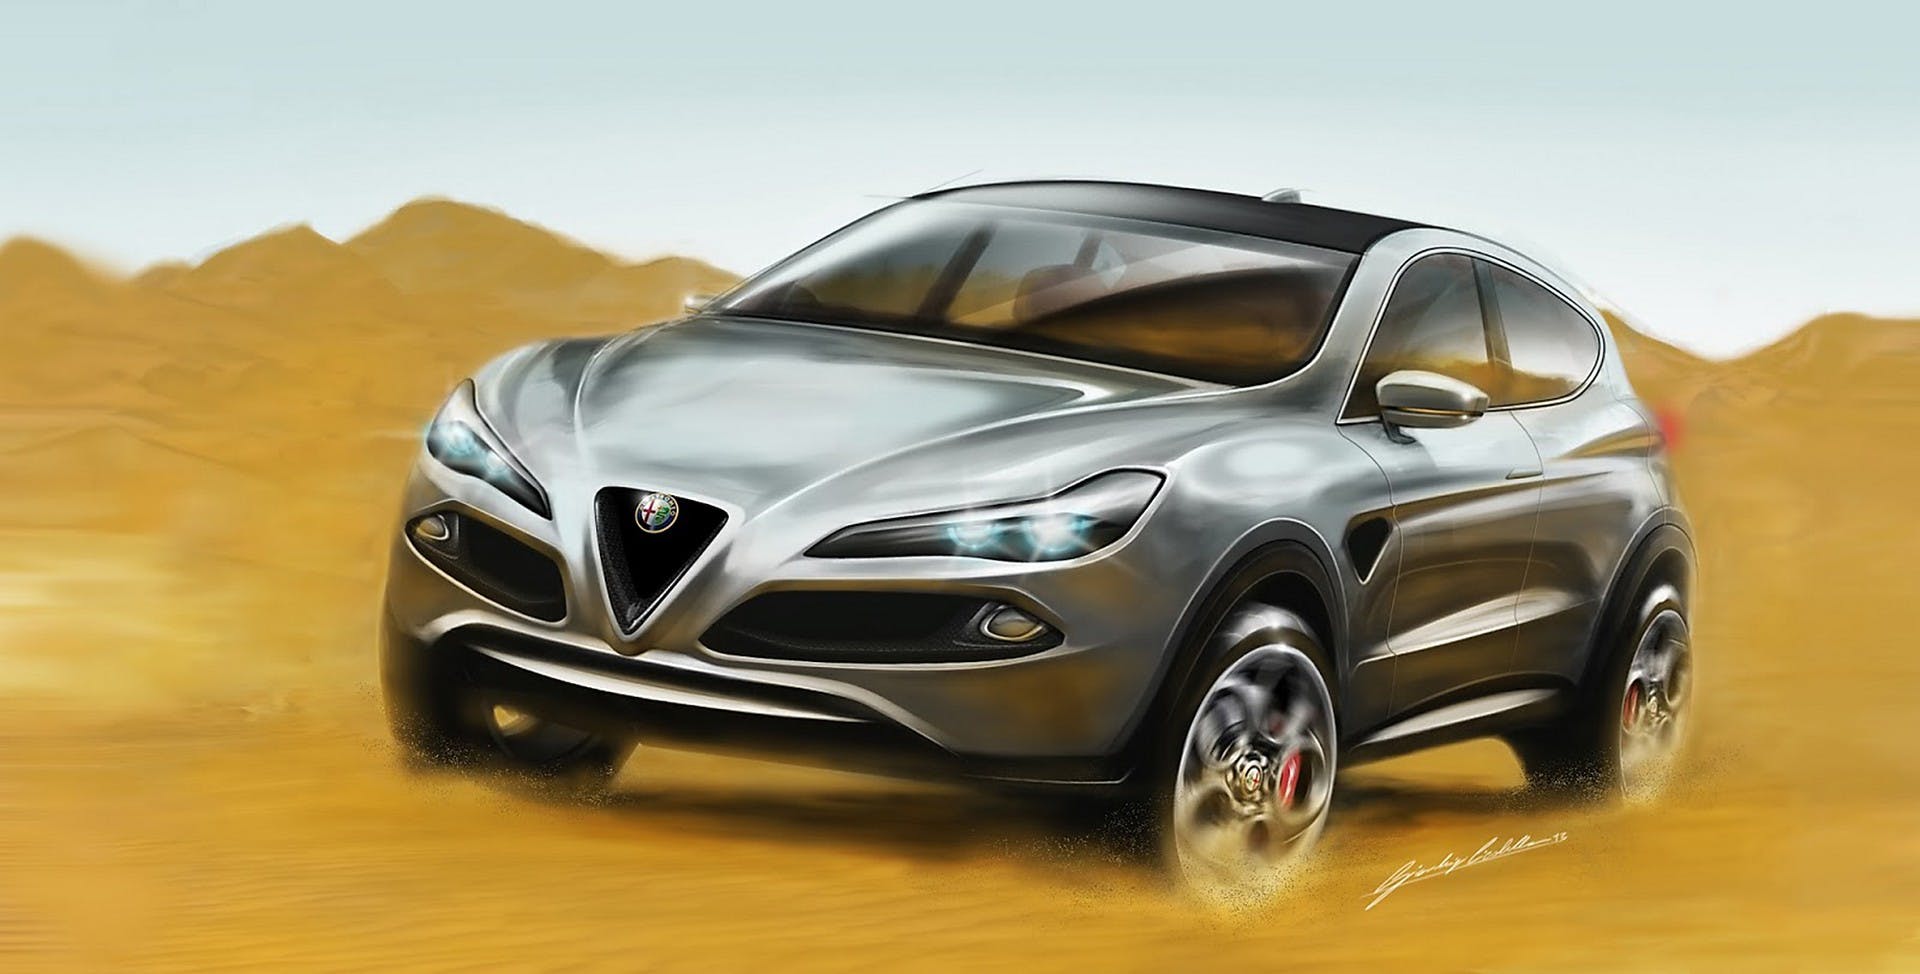 Alfa Romeo C-SUV rendering